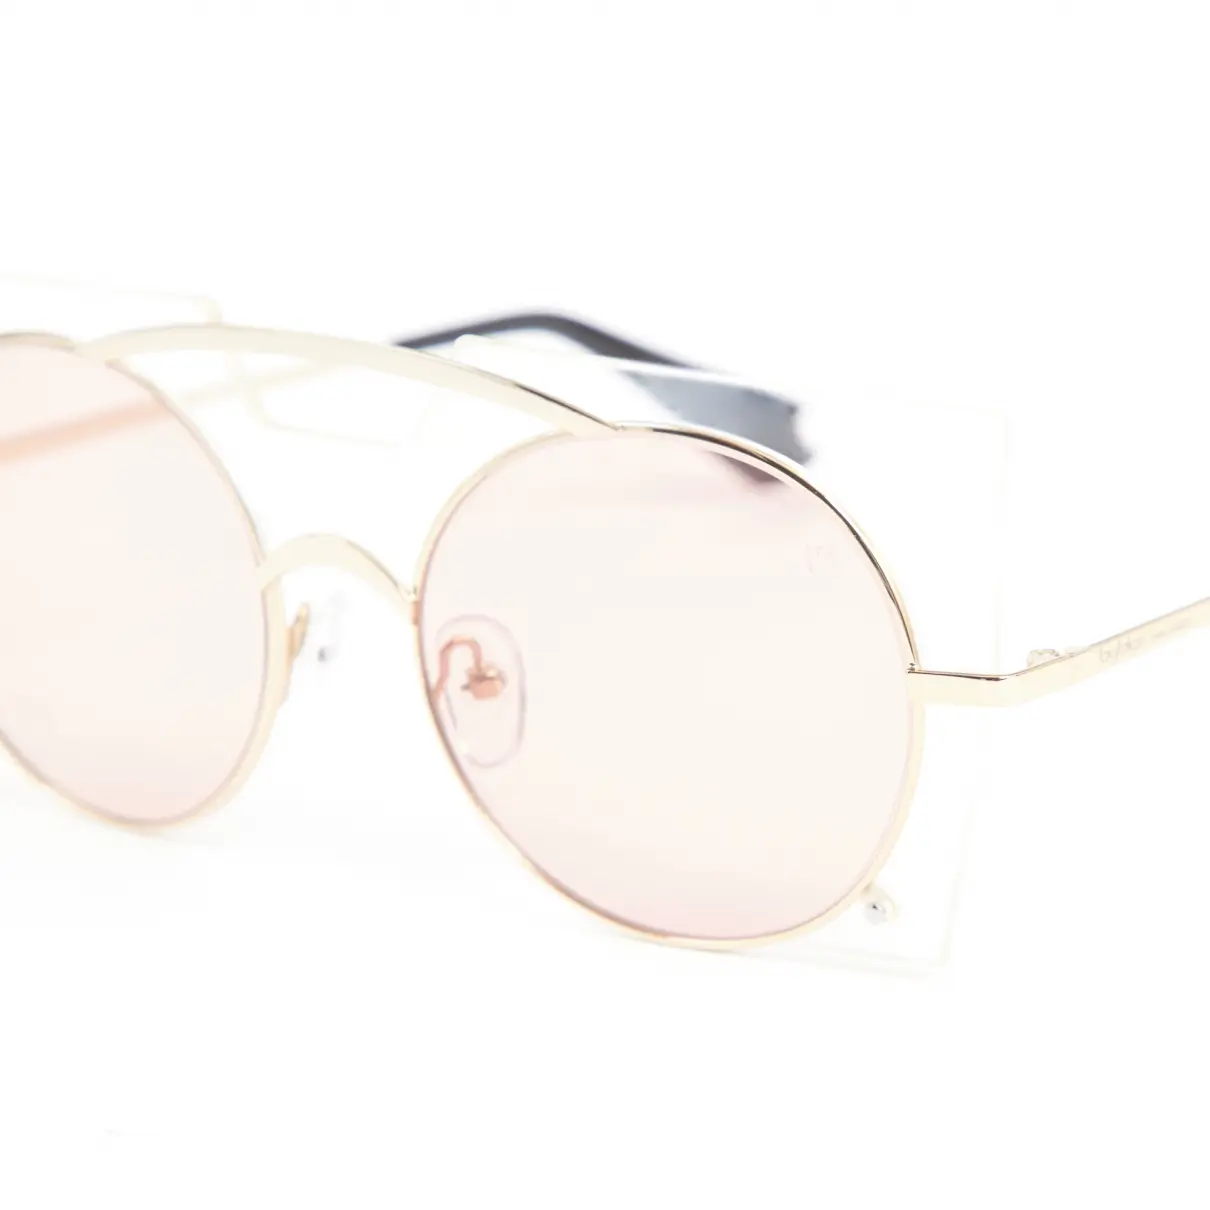 Luxury Byblos Sunglasses Women